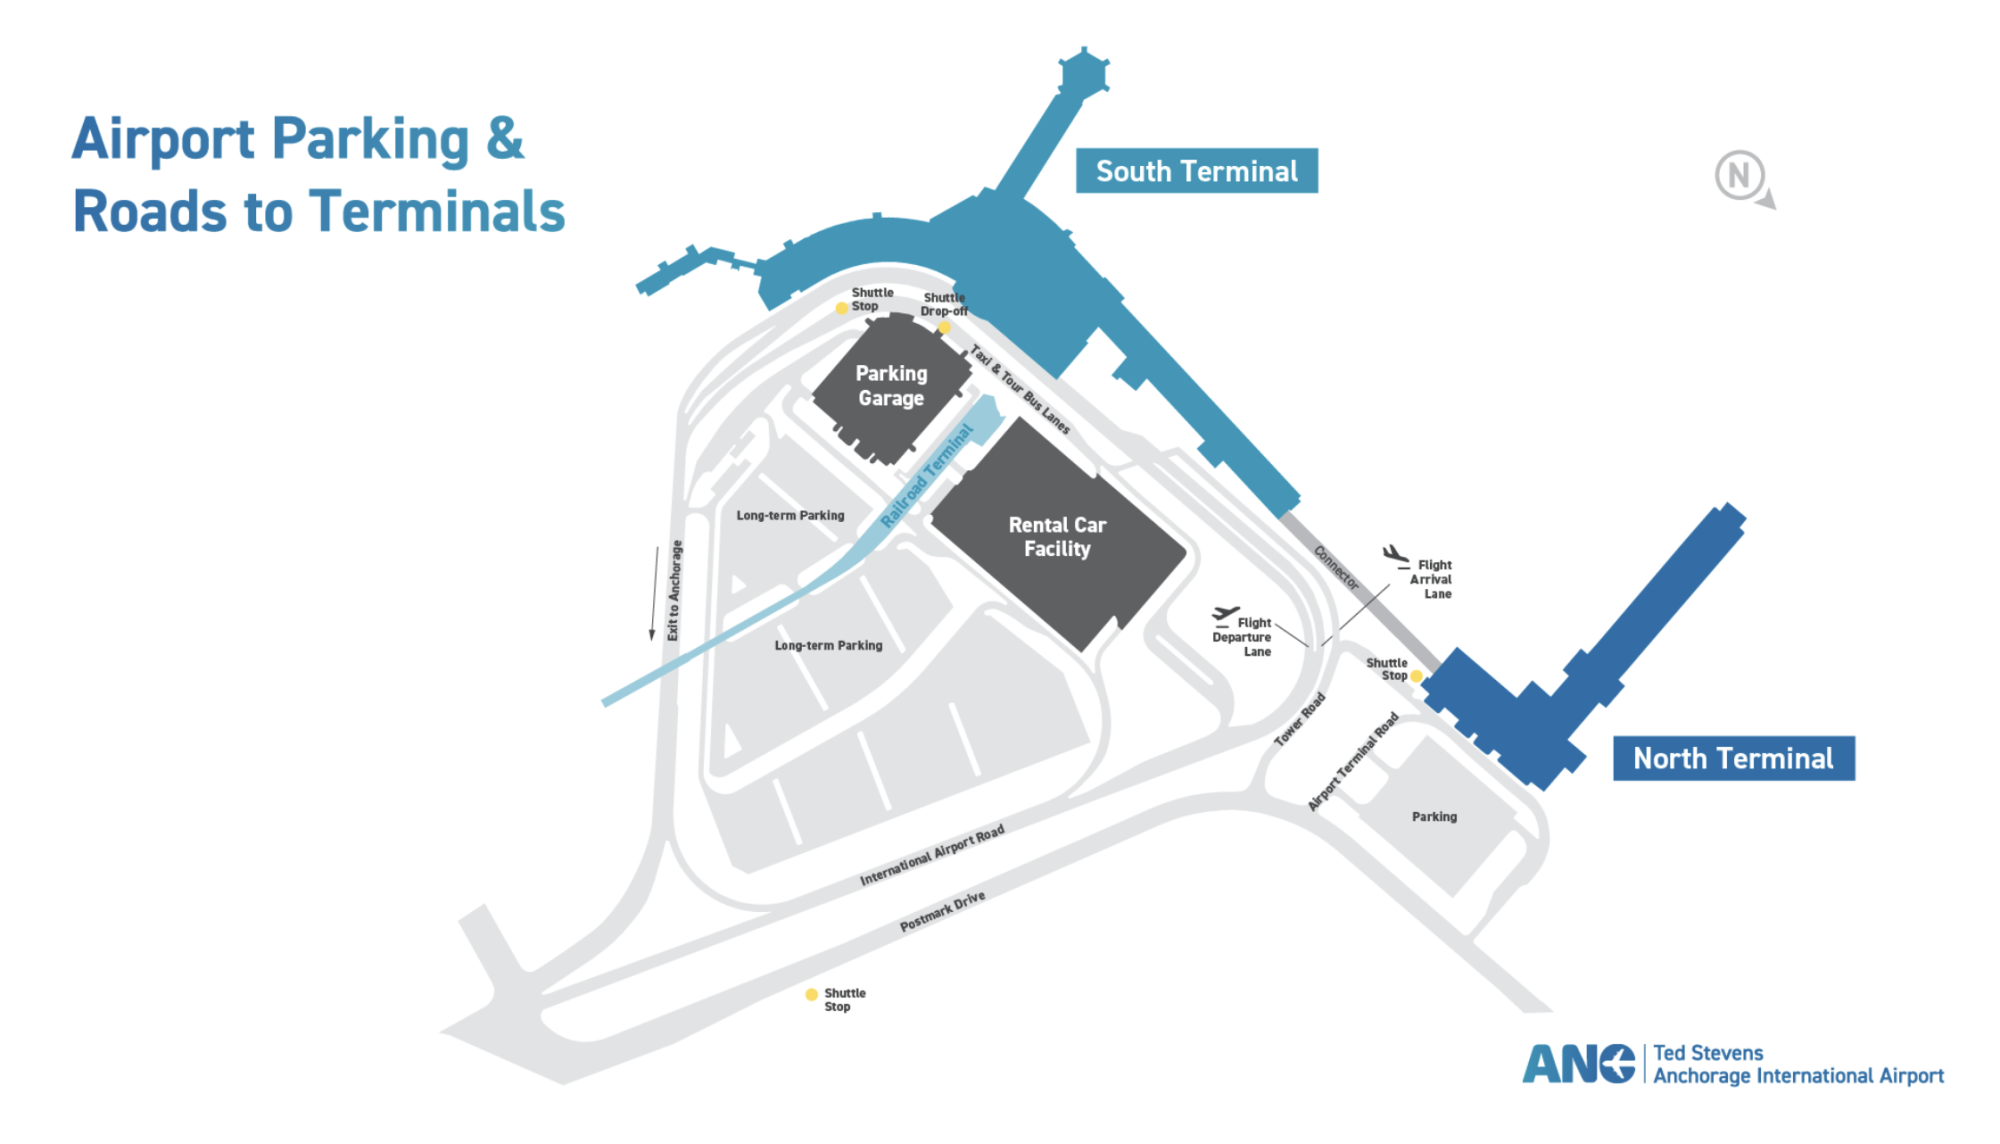 Аэропорт имени Теда Стивенса в Анкоридже. Аэропорт Мале схема. План аэропорта Мале. Схема аэропорта Мале Мальдивы. Аэропорт мале вылет